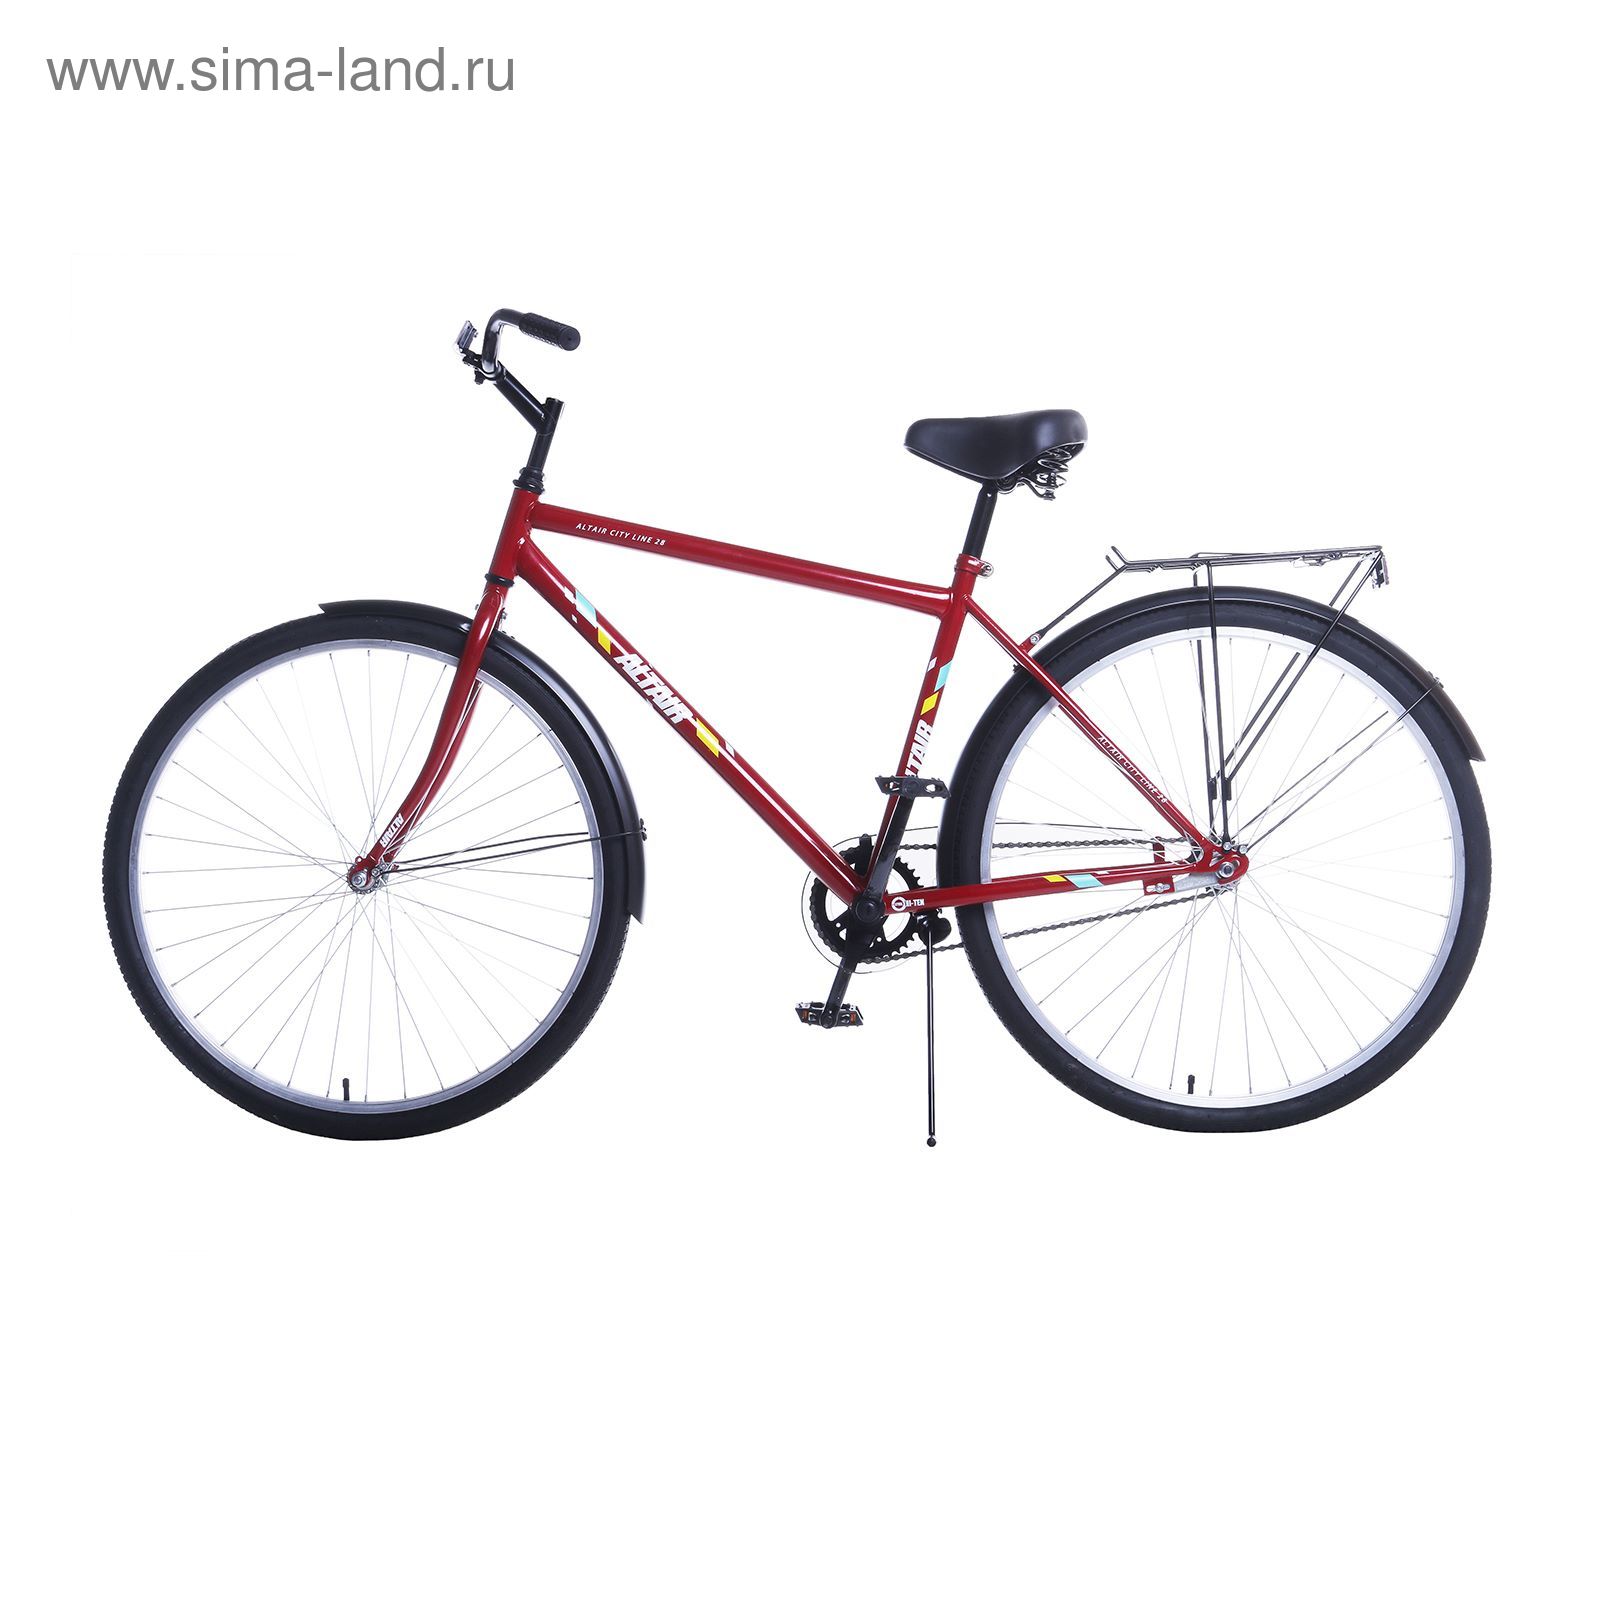 Велосипед 28" Altair City high 28, 2017, цвет бордовый, размер 19"